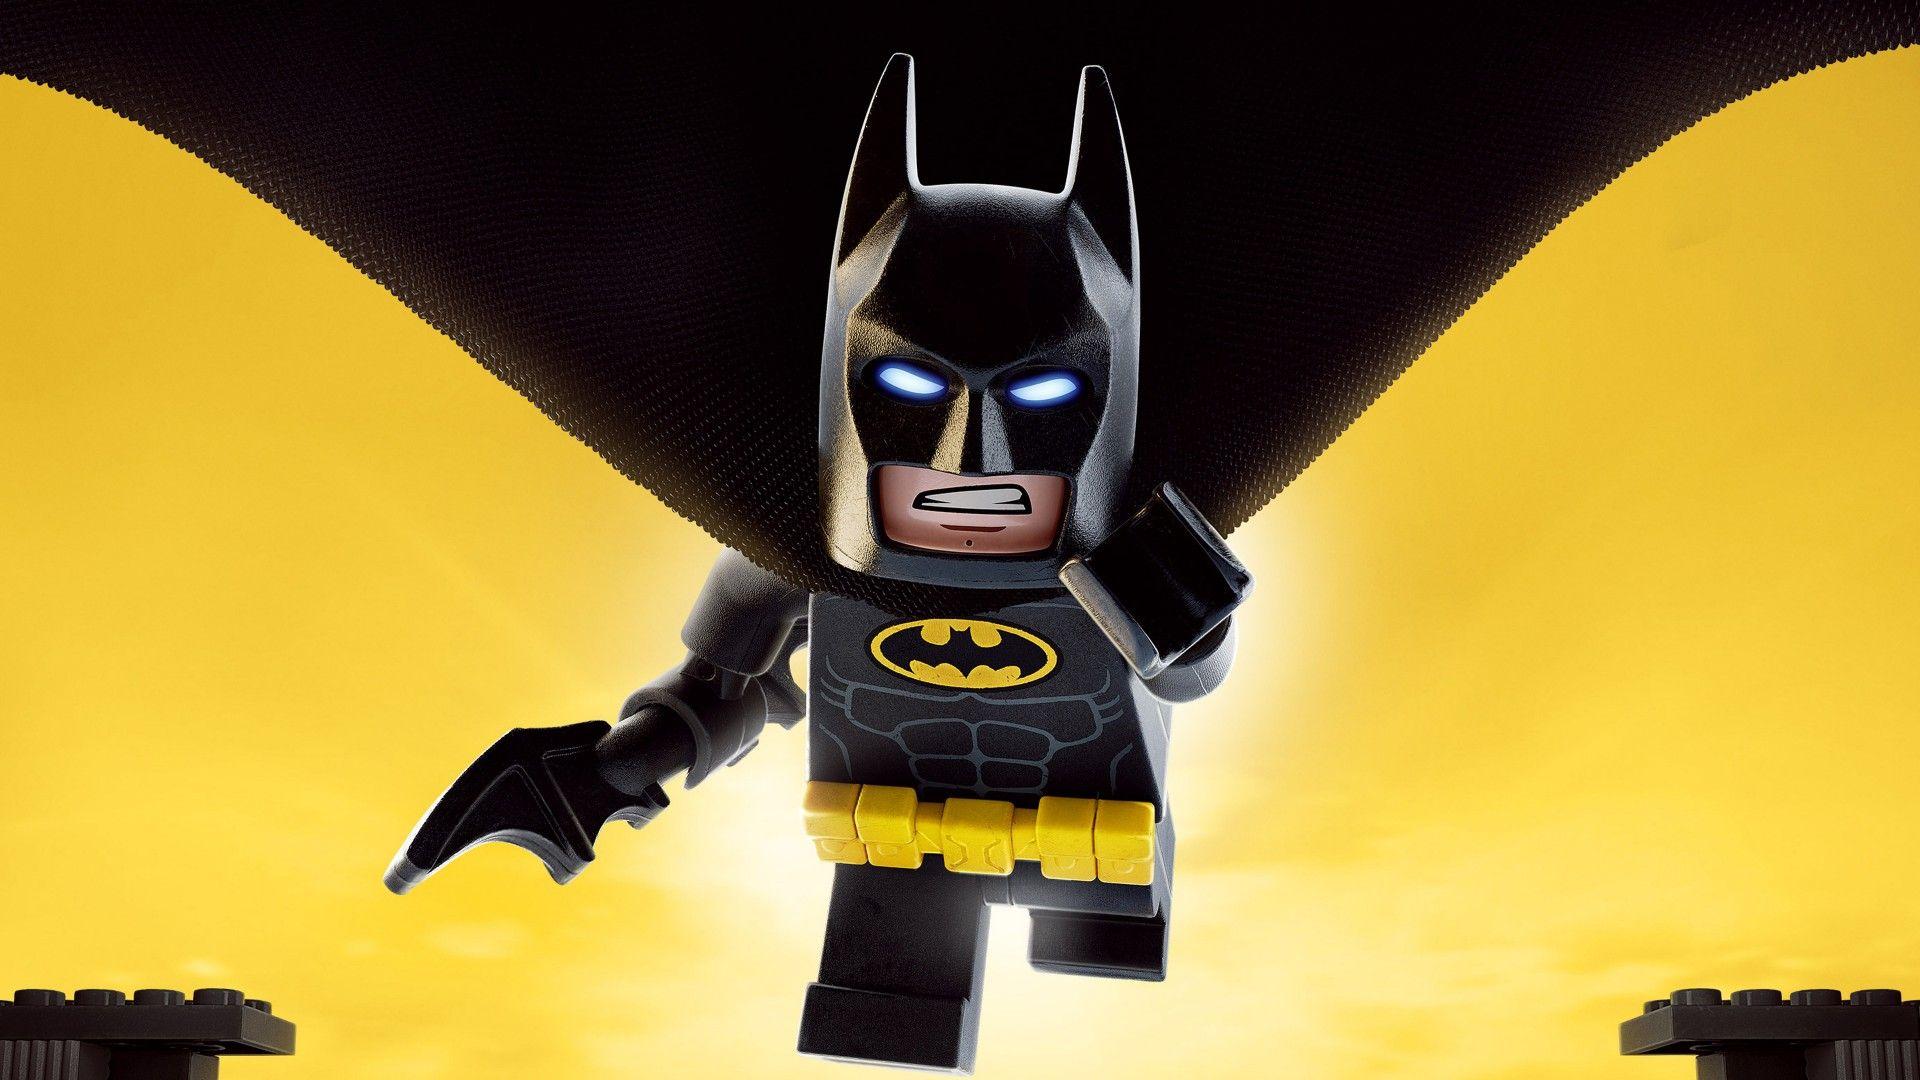 The Lego Batman Movie 4K 2017 Wallpaper